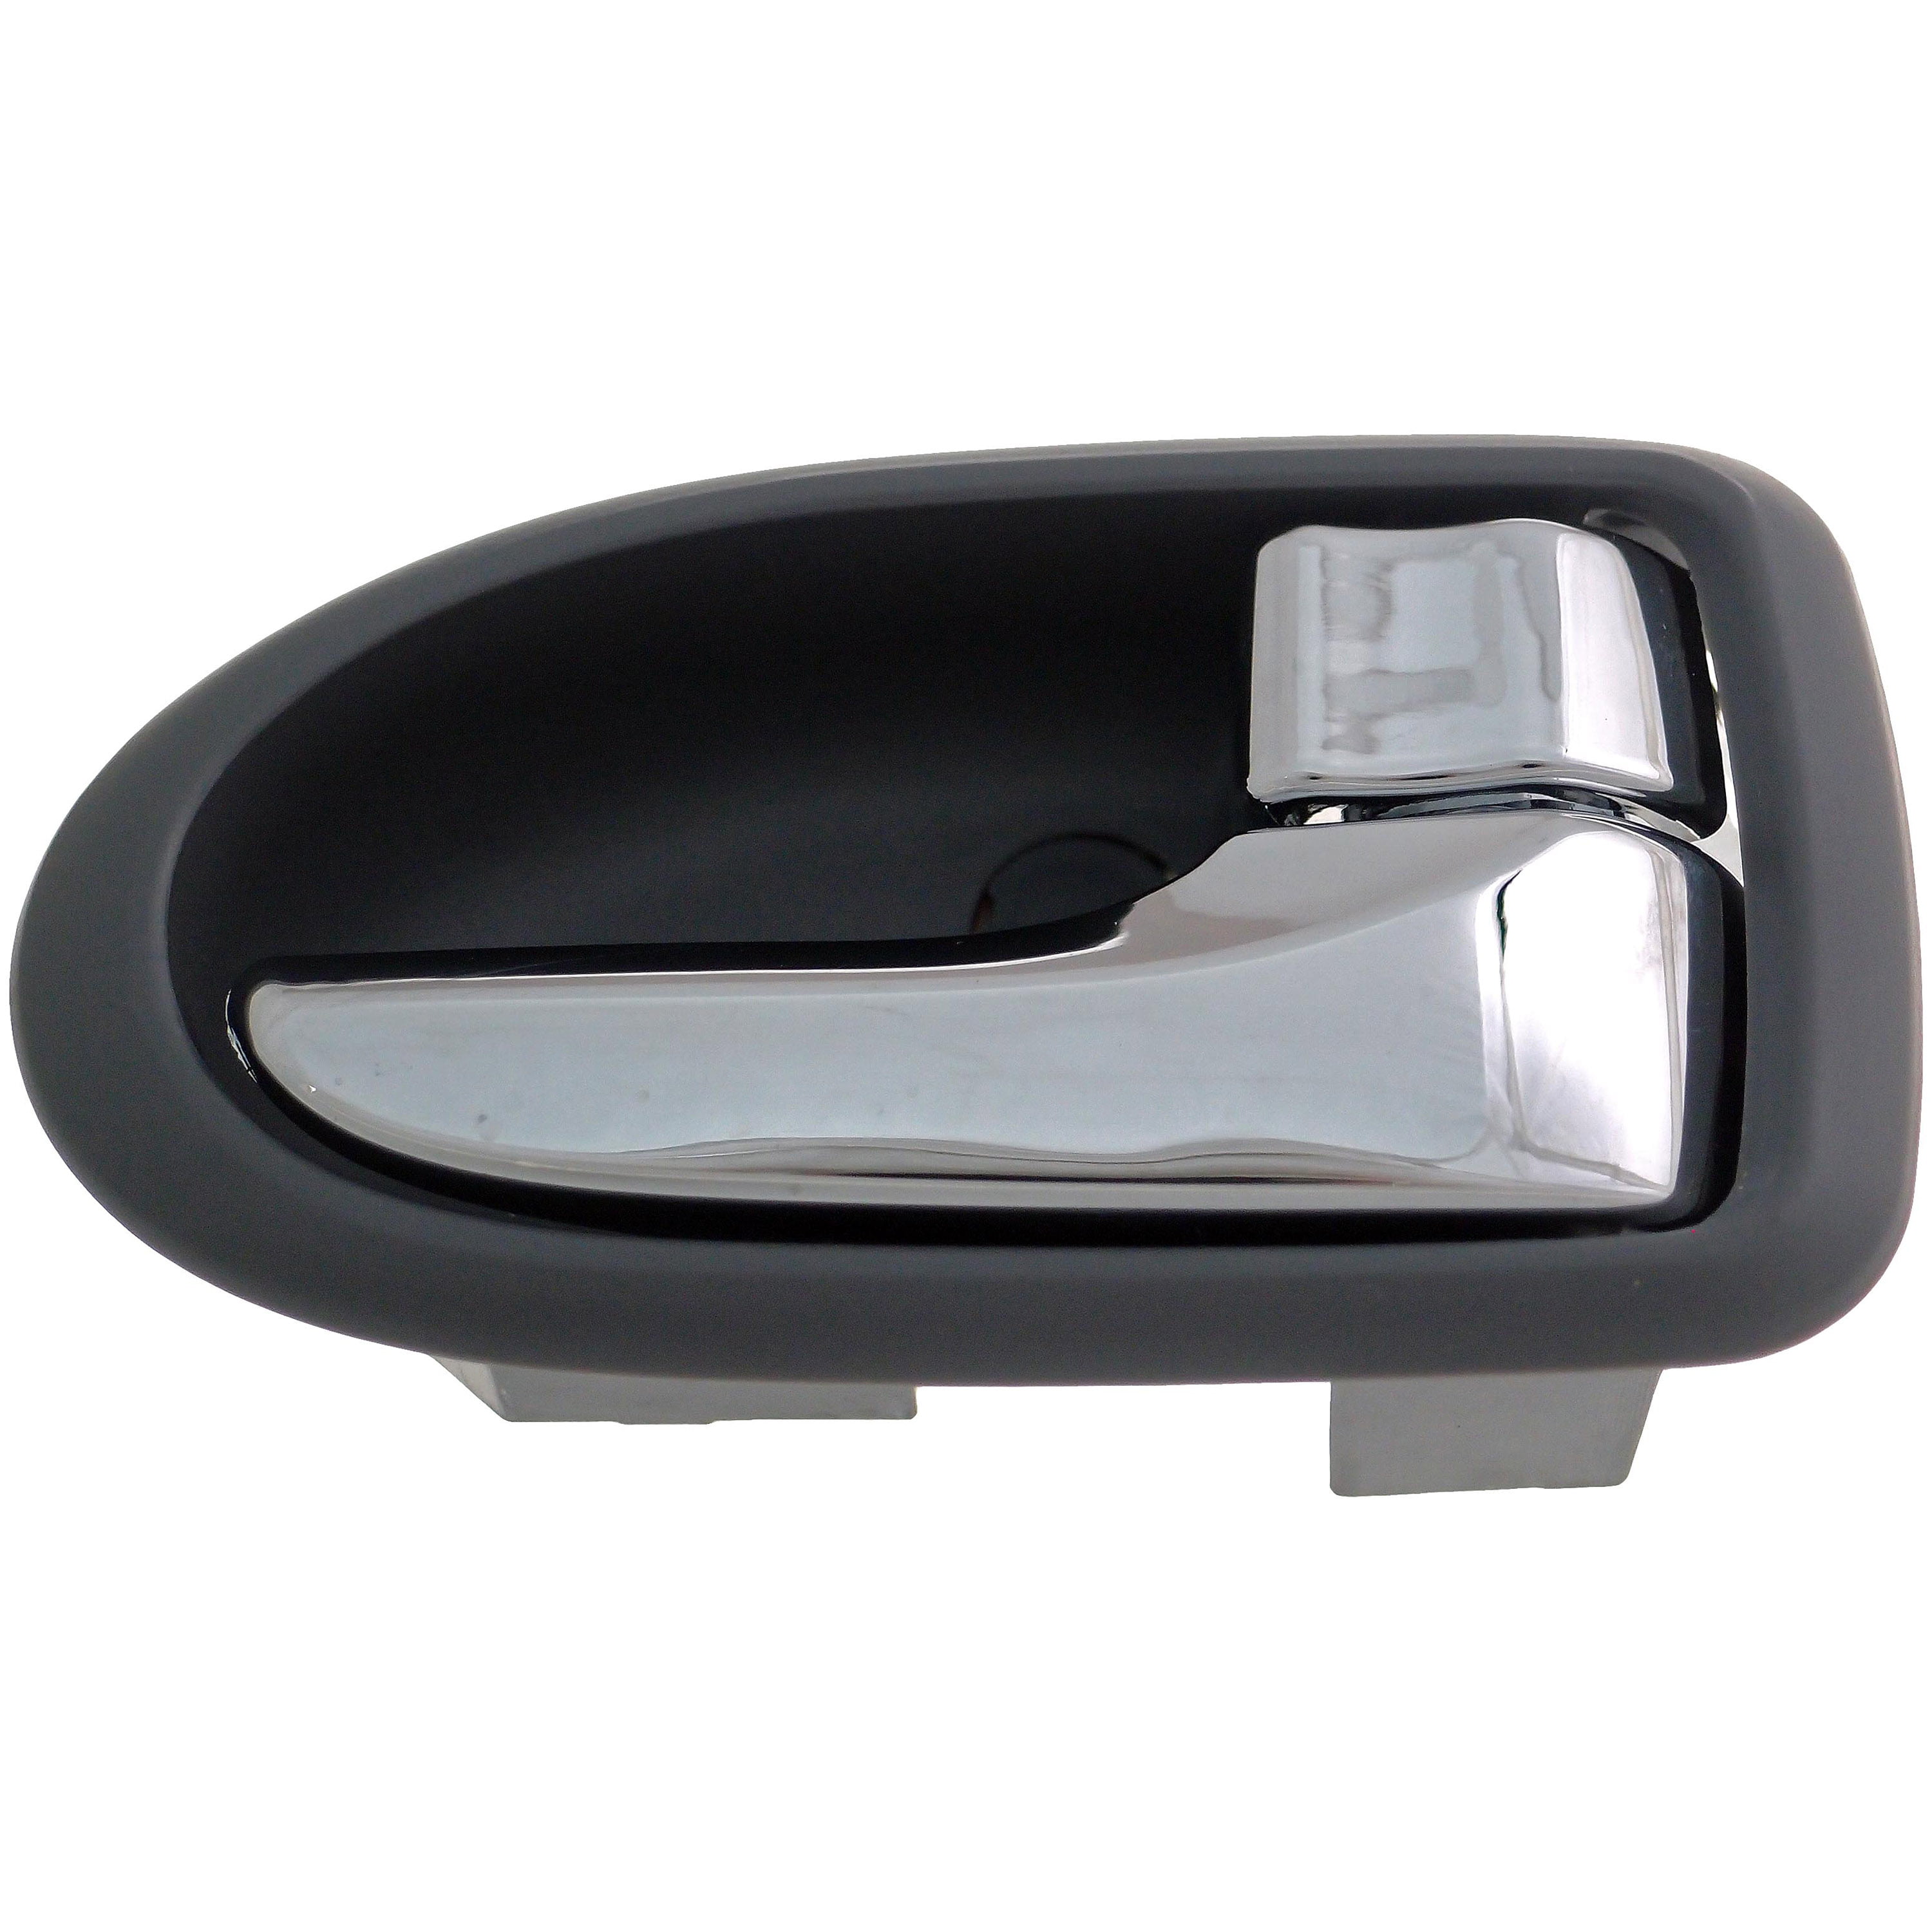 Dorman 83533 Front Driver Side Interior Door Handle for Select Kia Models Chrome 